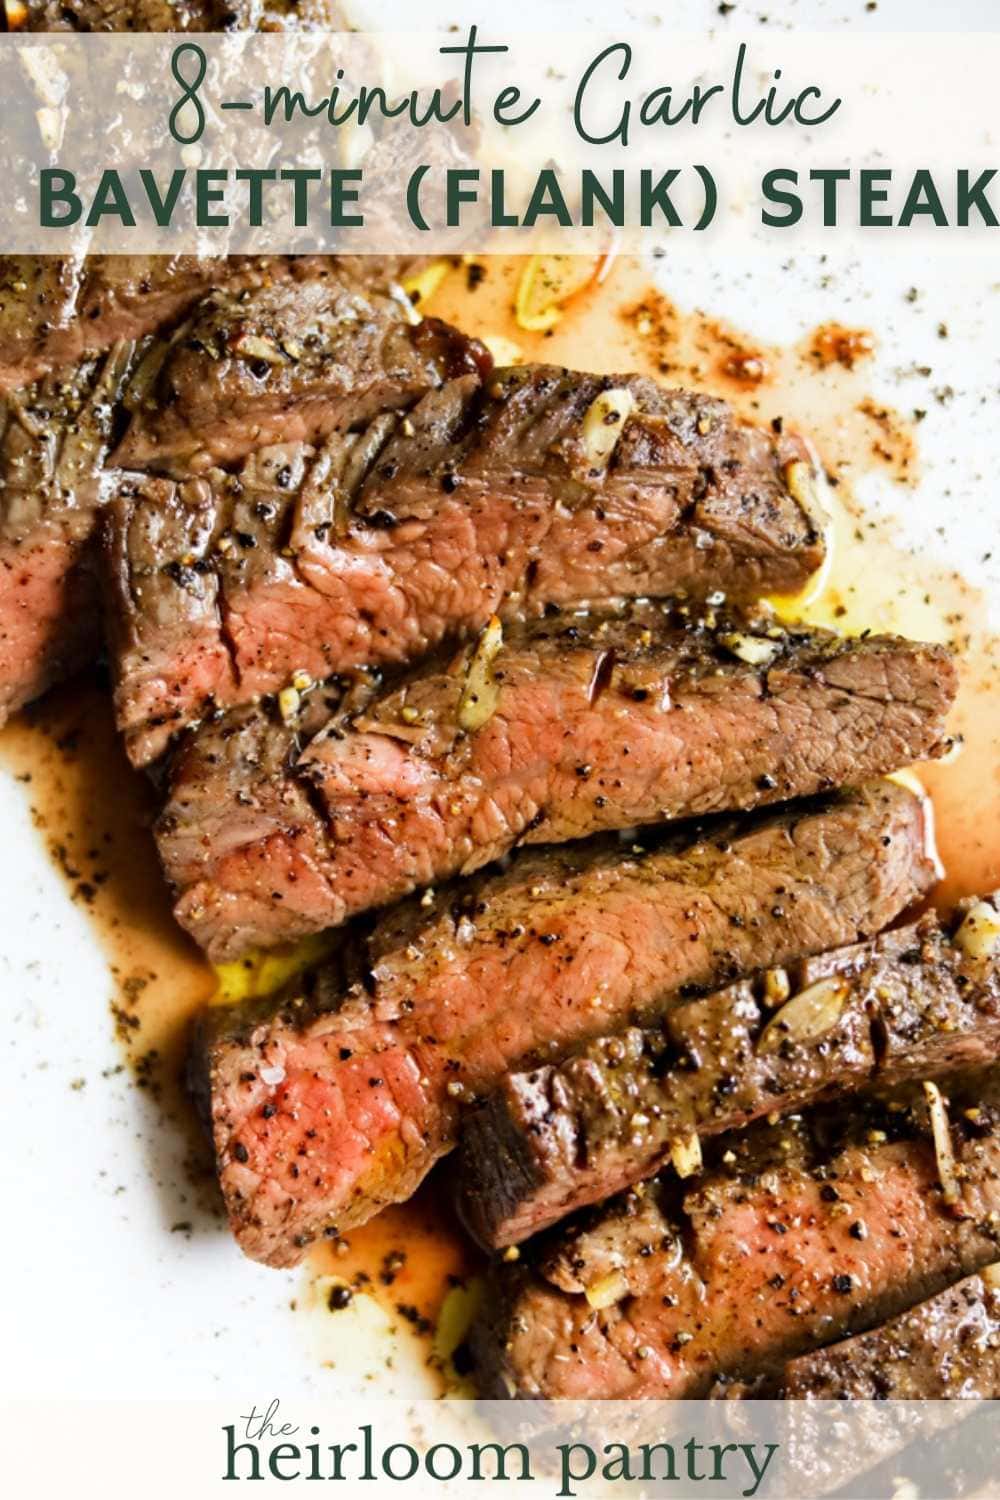 Closeup of bavette steak (garlic flank steak) sliced medium rare on a white plate au jus for Pinterest pin.